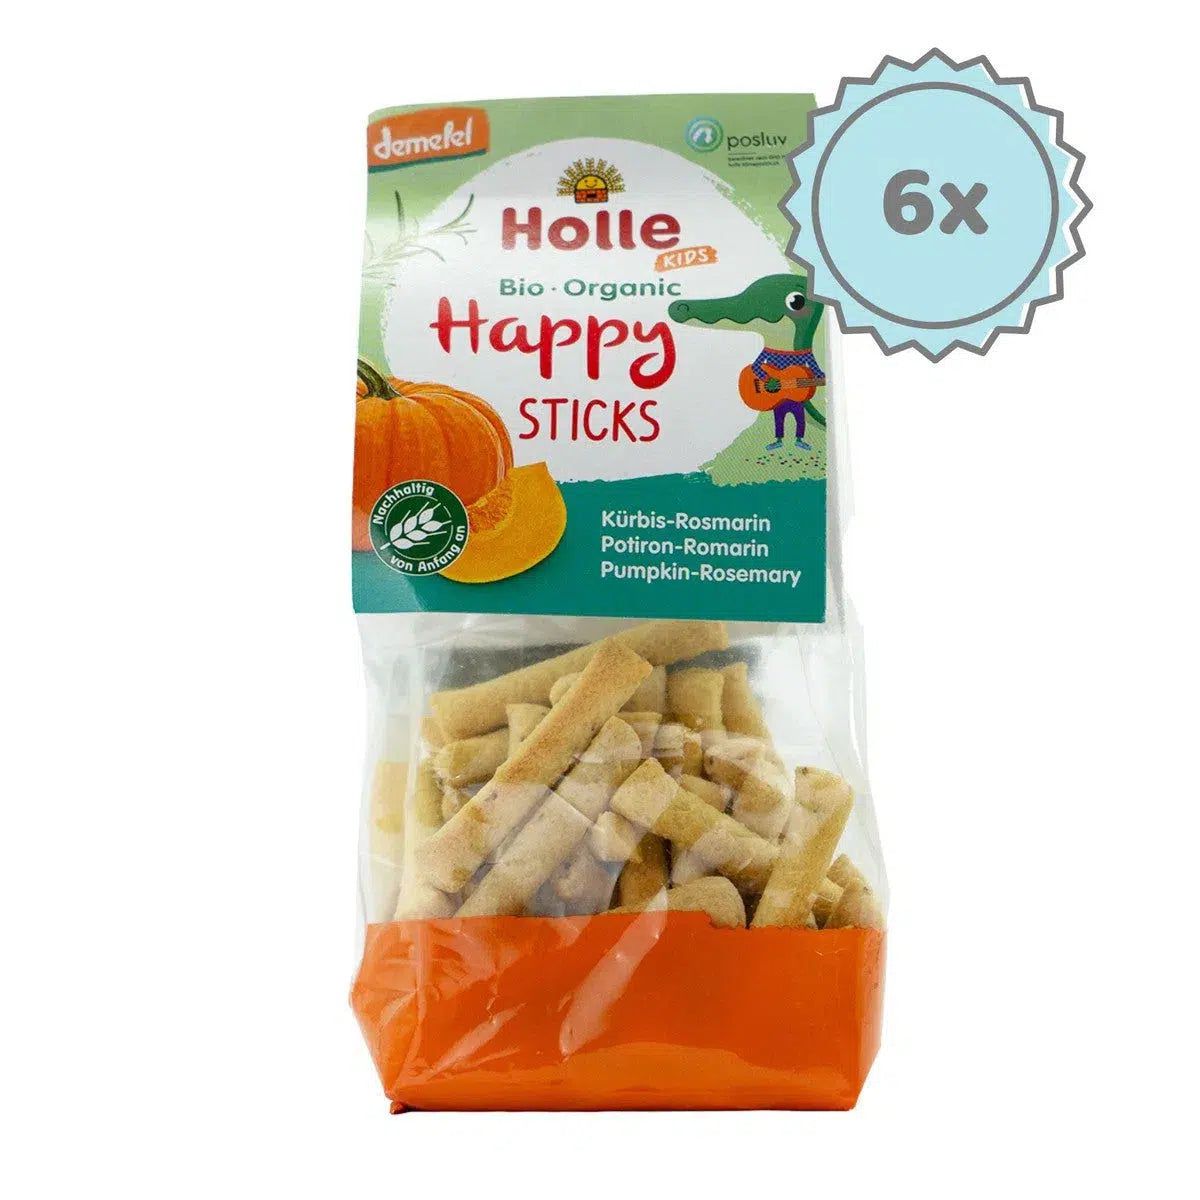 Holle Snack - Organic Pumpkin-Rosemary Sticks (3+ Years) - 6 Packs